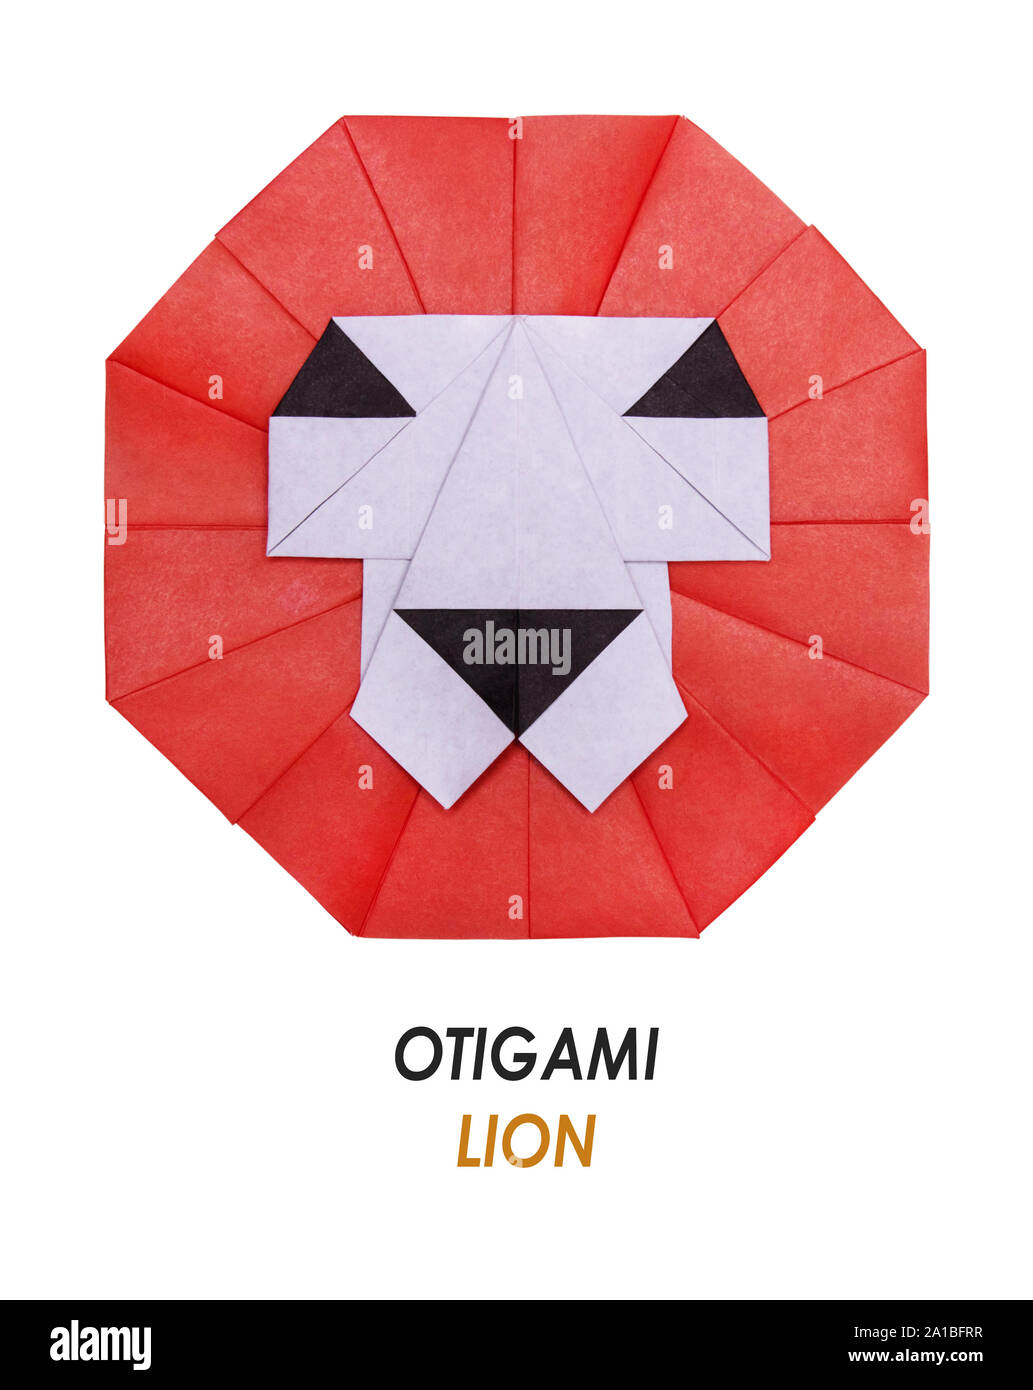 Origami Lion Stock Photos Origami Lion Stock Images Alamy